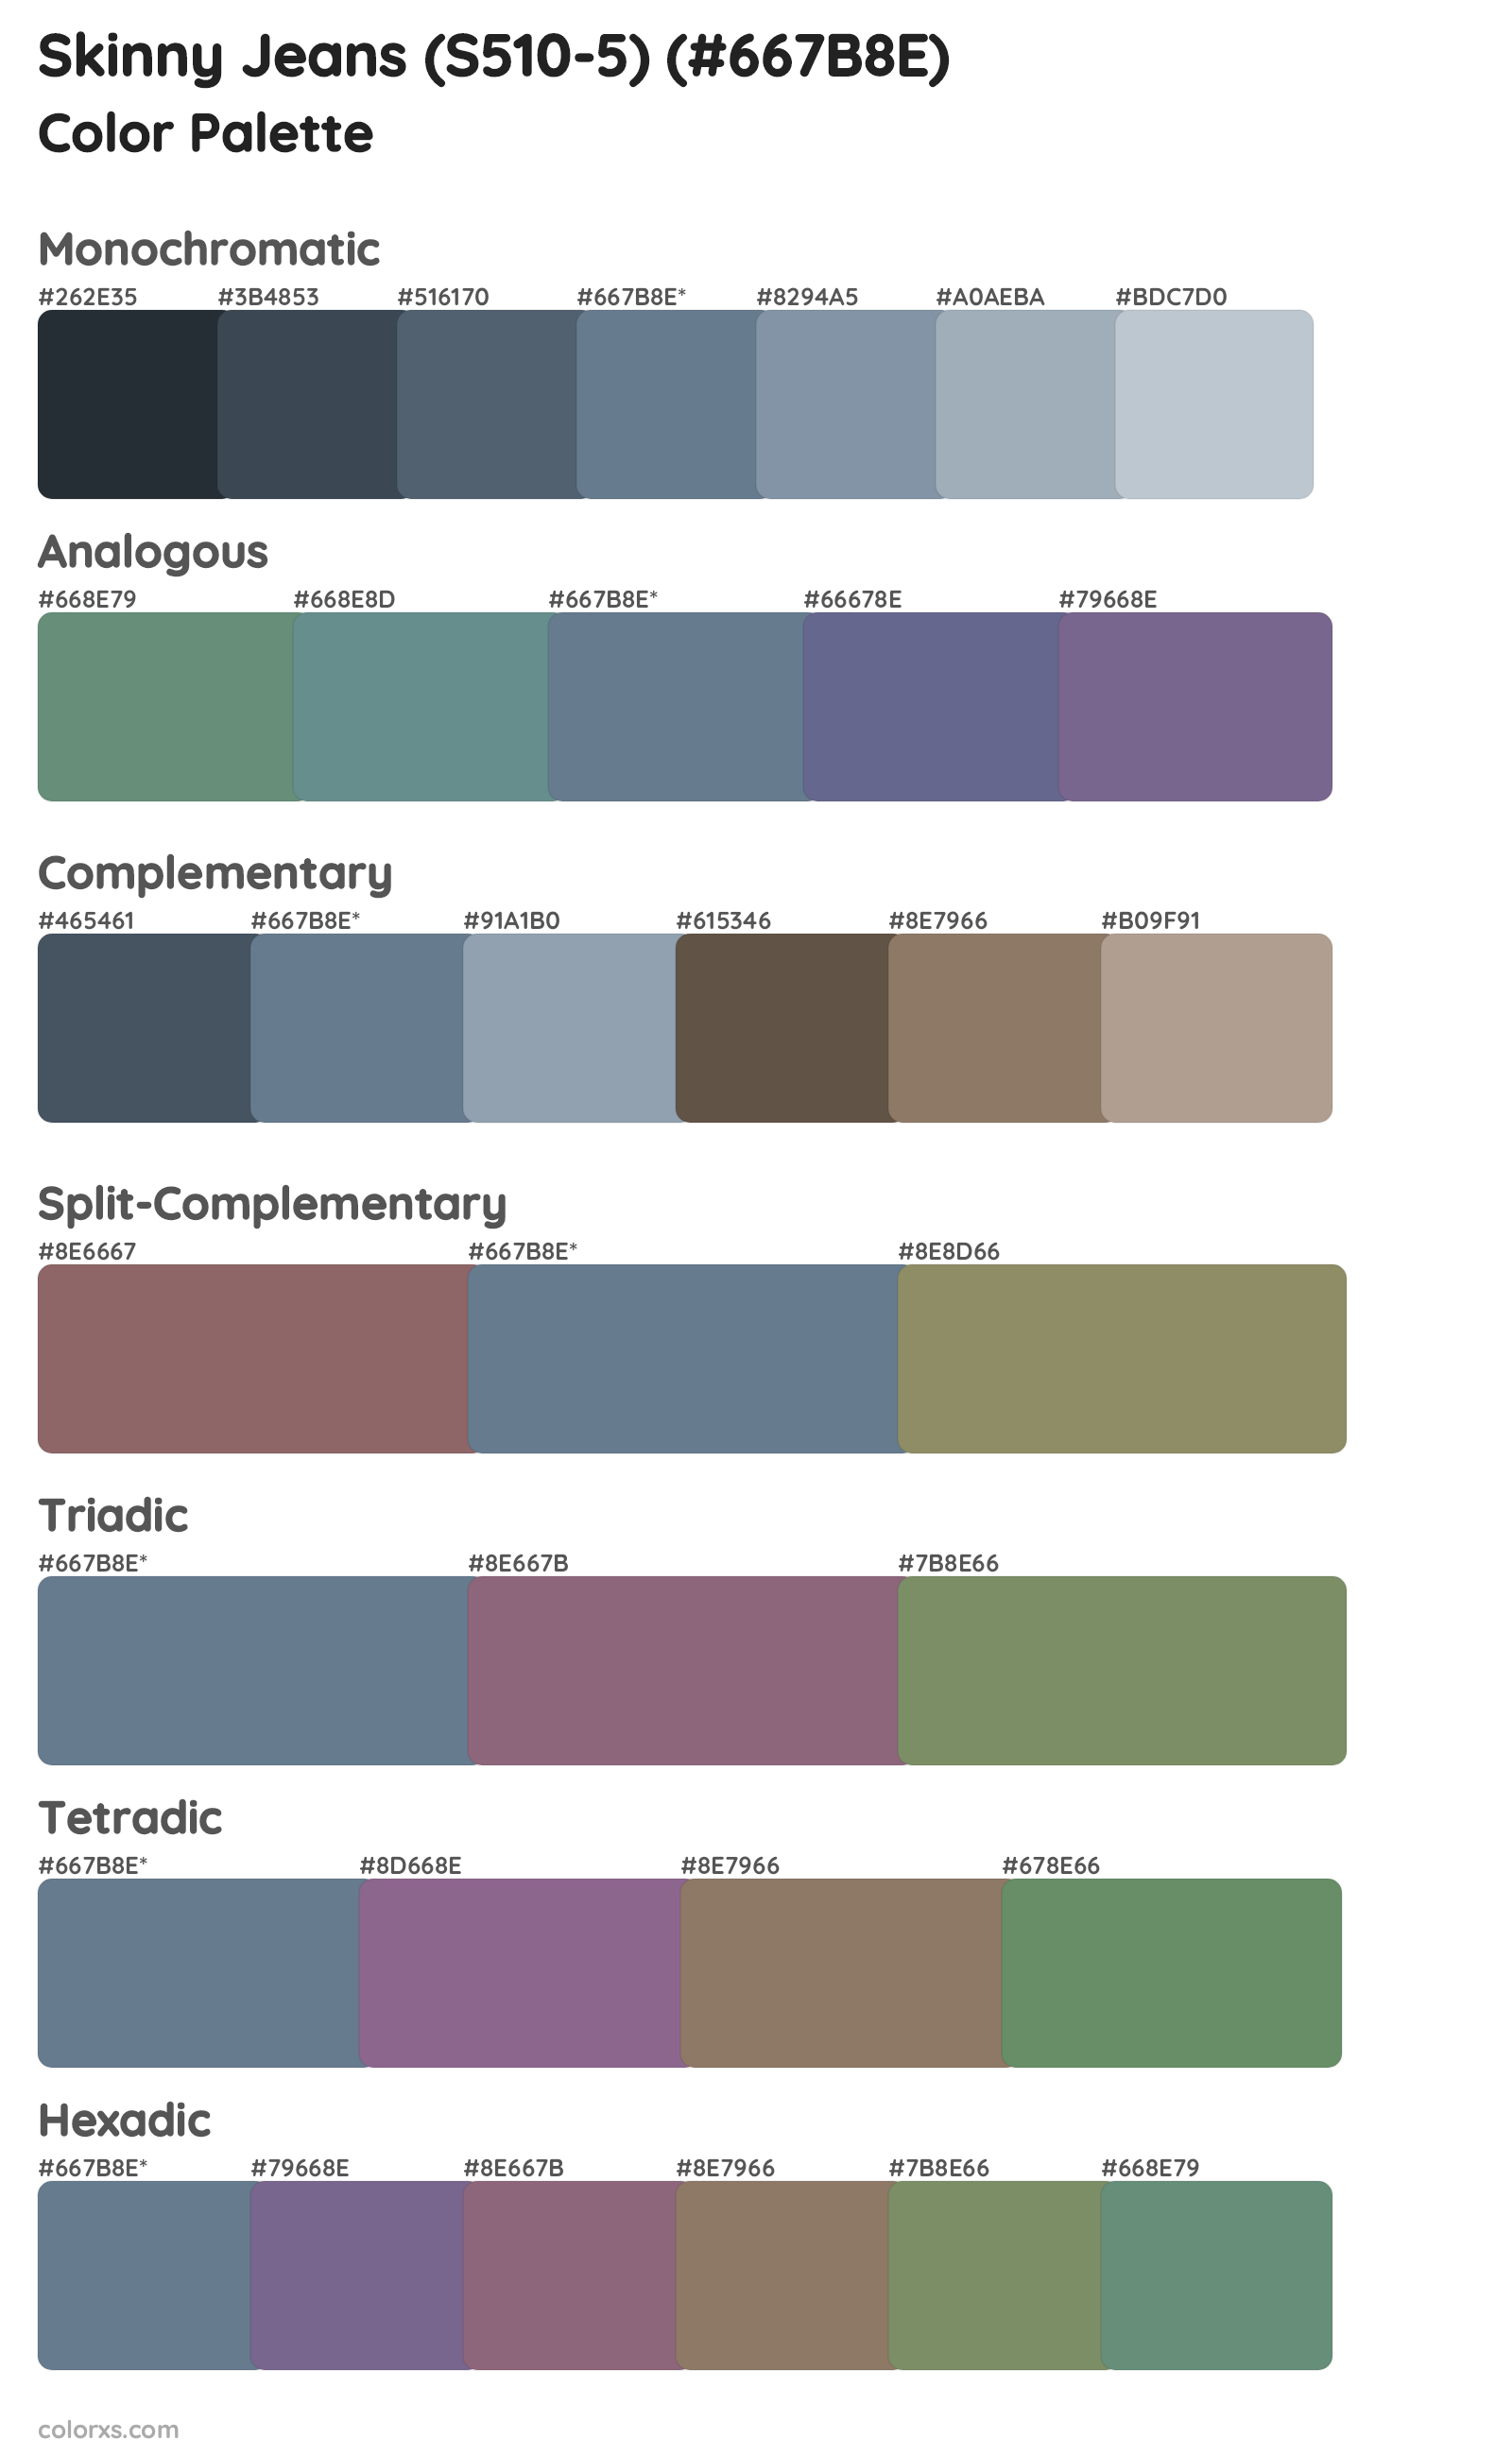 Skinny Jeans (S510-5) Color Scheme Palettes